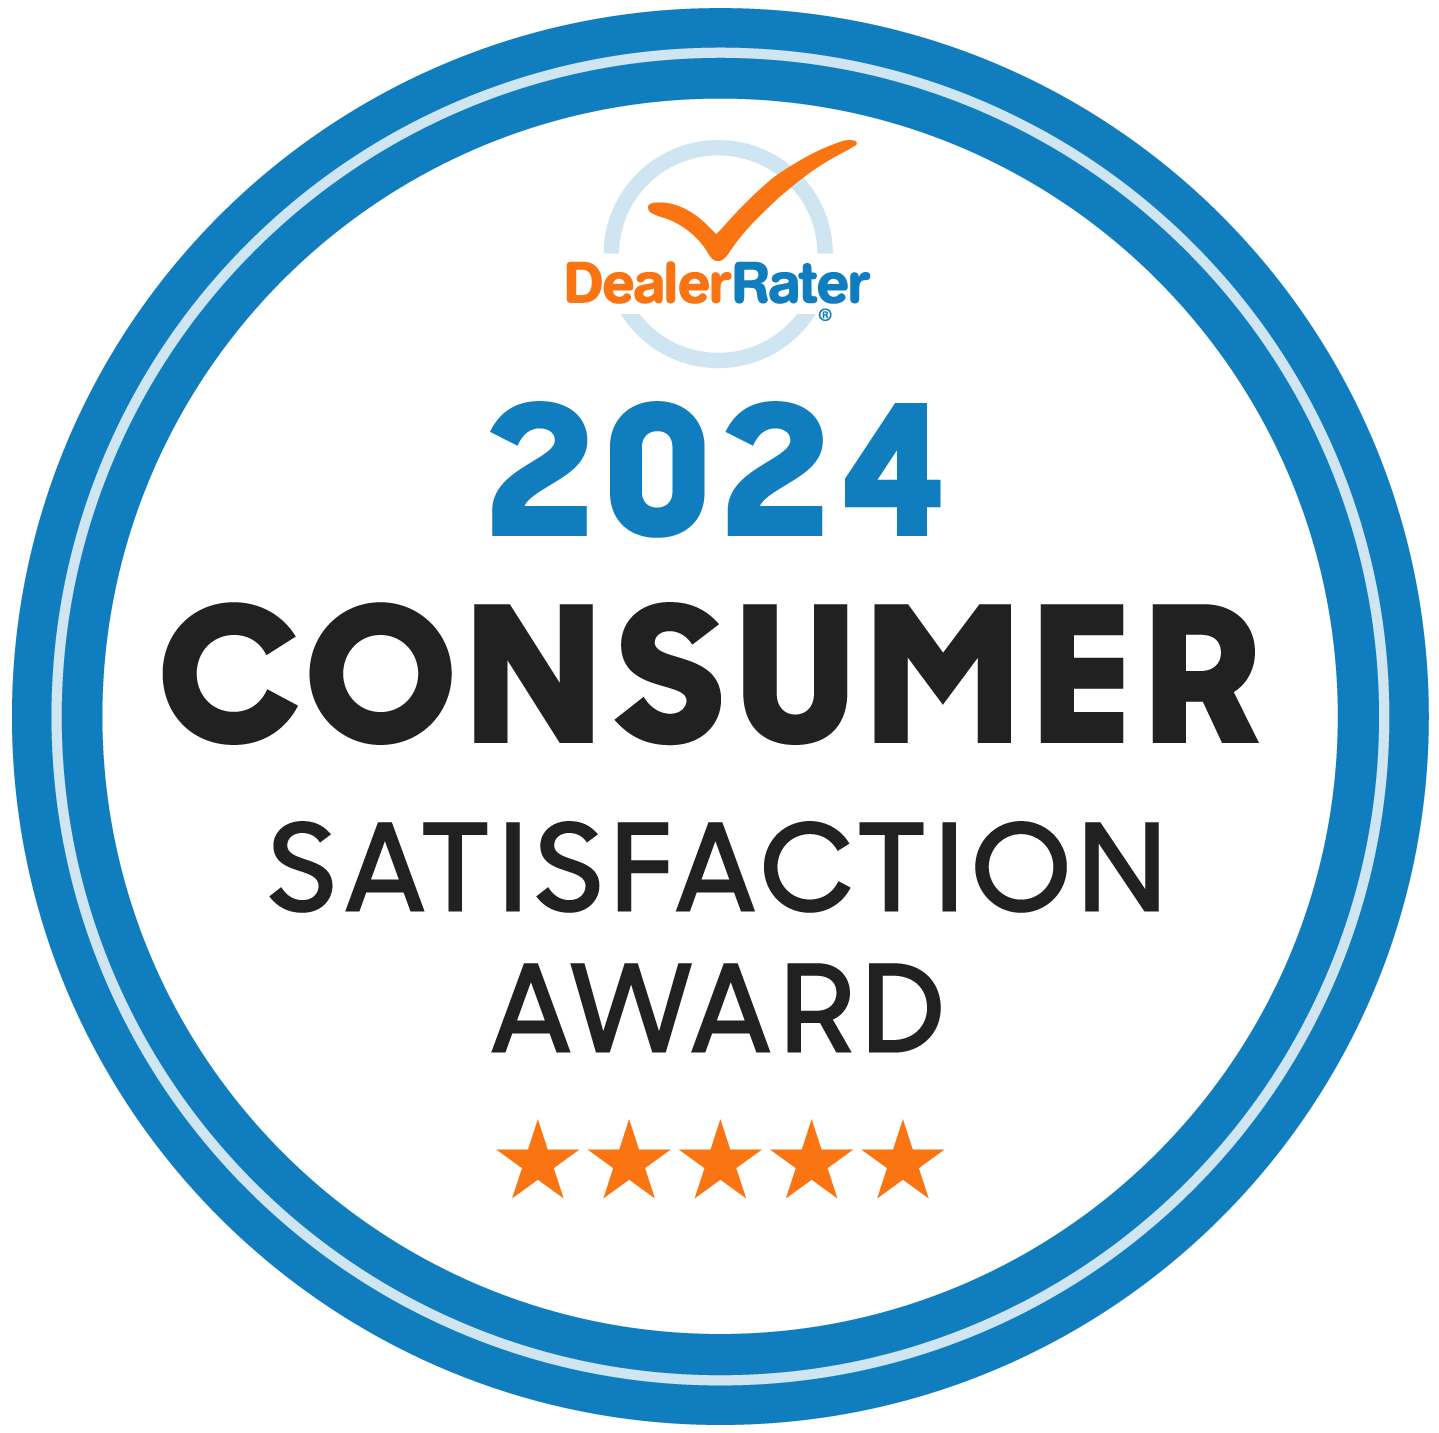 2024 Consumer Satisfaction Award - DealerRater